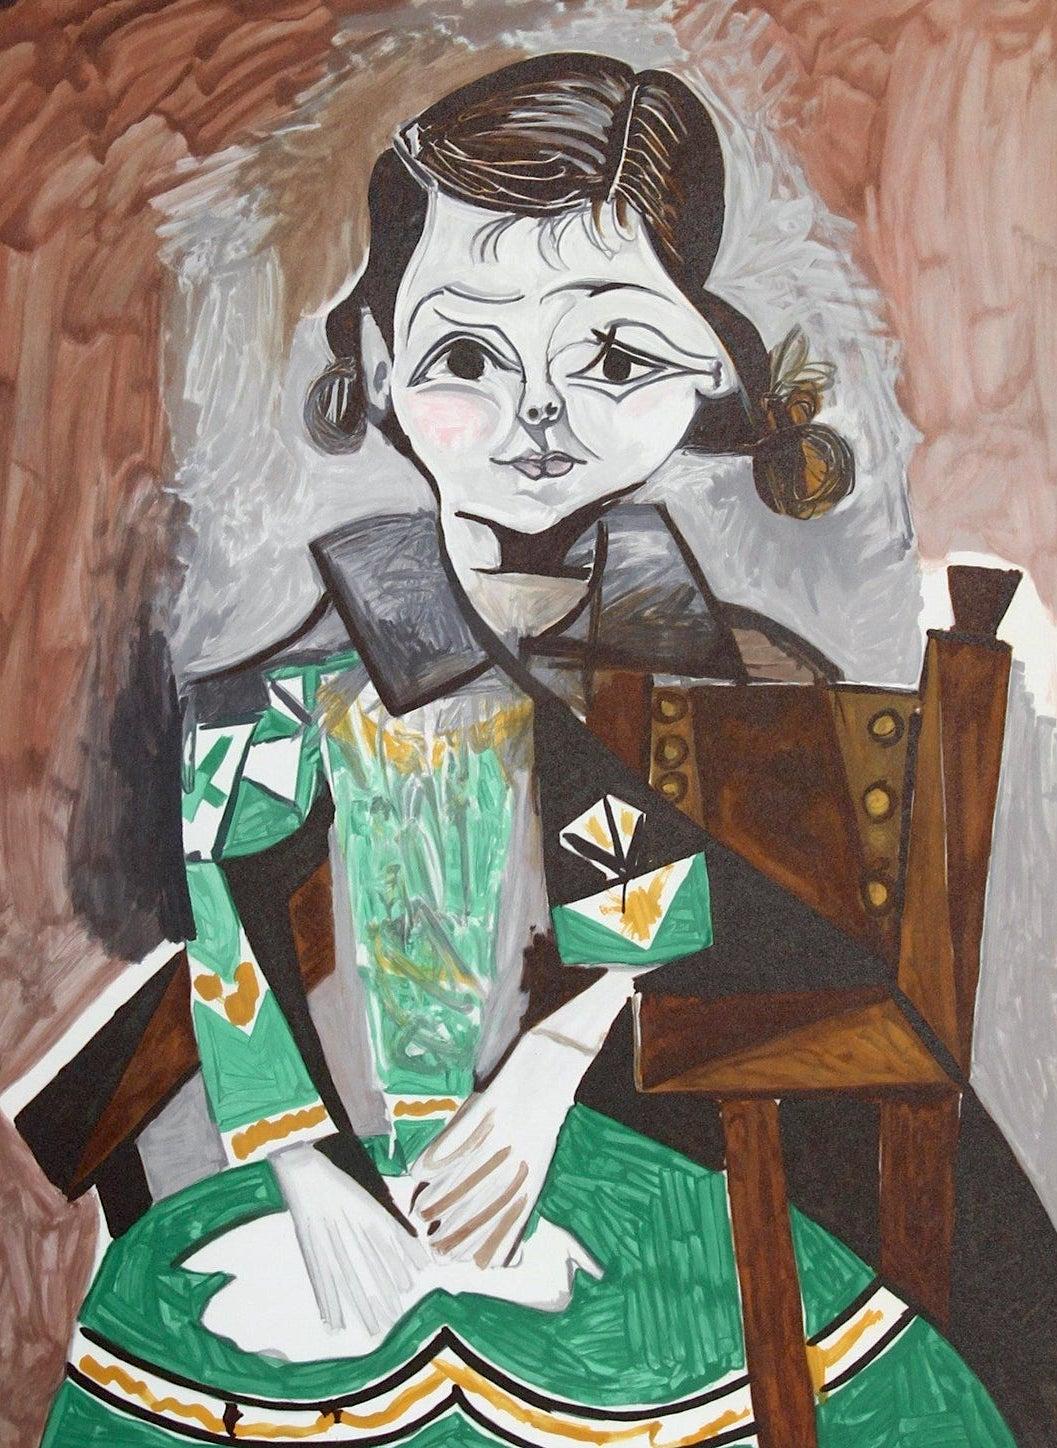 PETITE FILLE A LA ROBE VERTE (PalomaPicasso) Lithographie, Kleines Mädchenkleid – Print von (after) Pablo Picasso